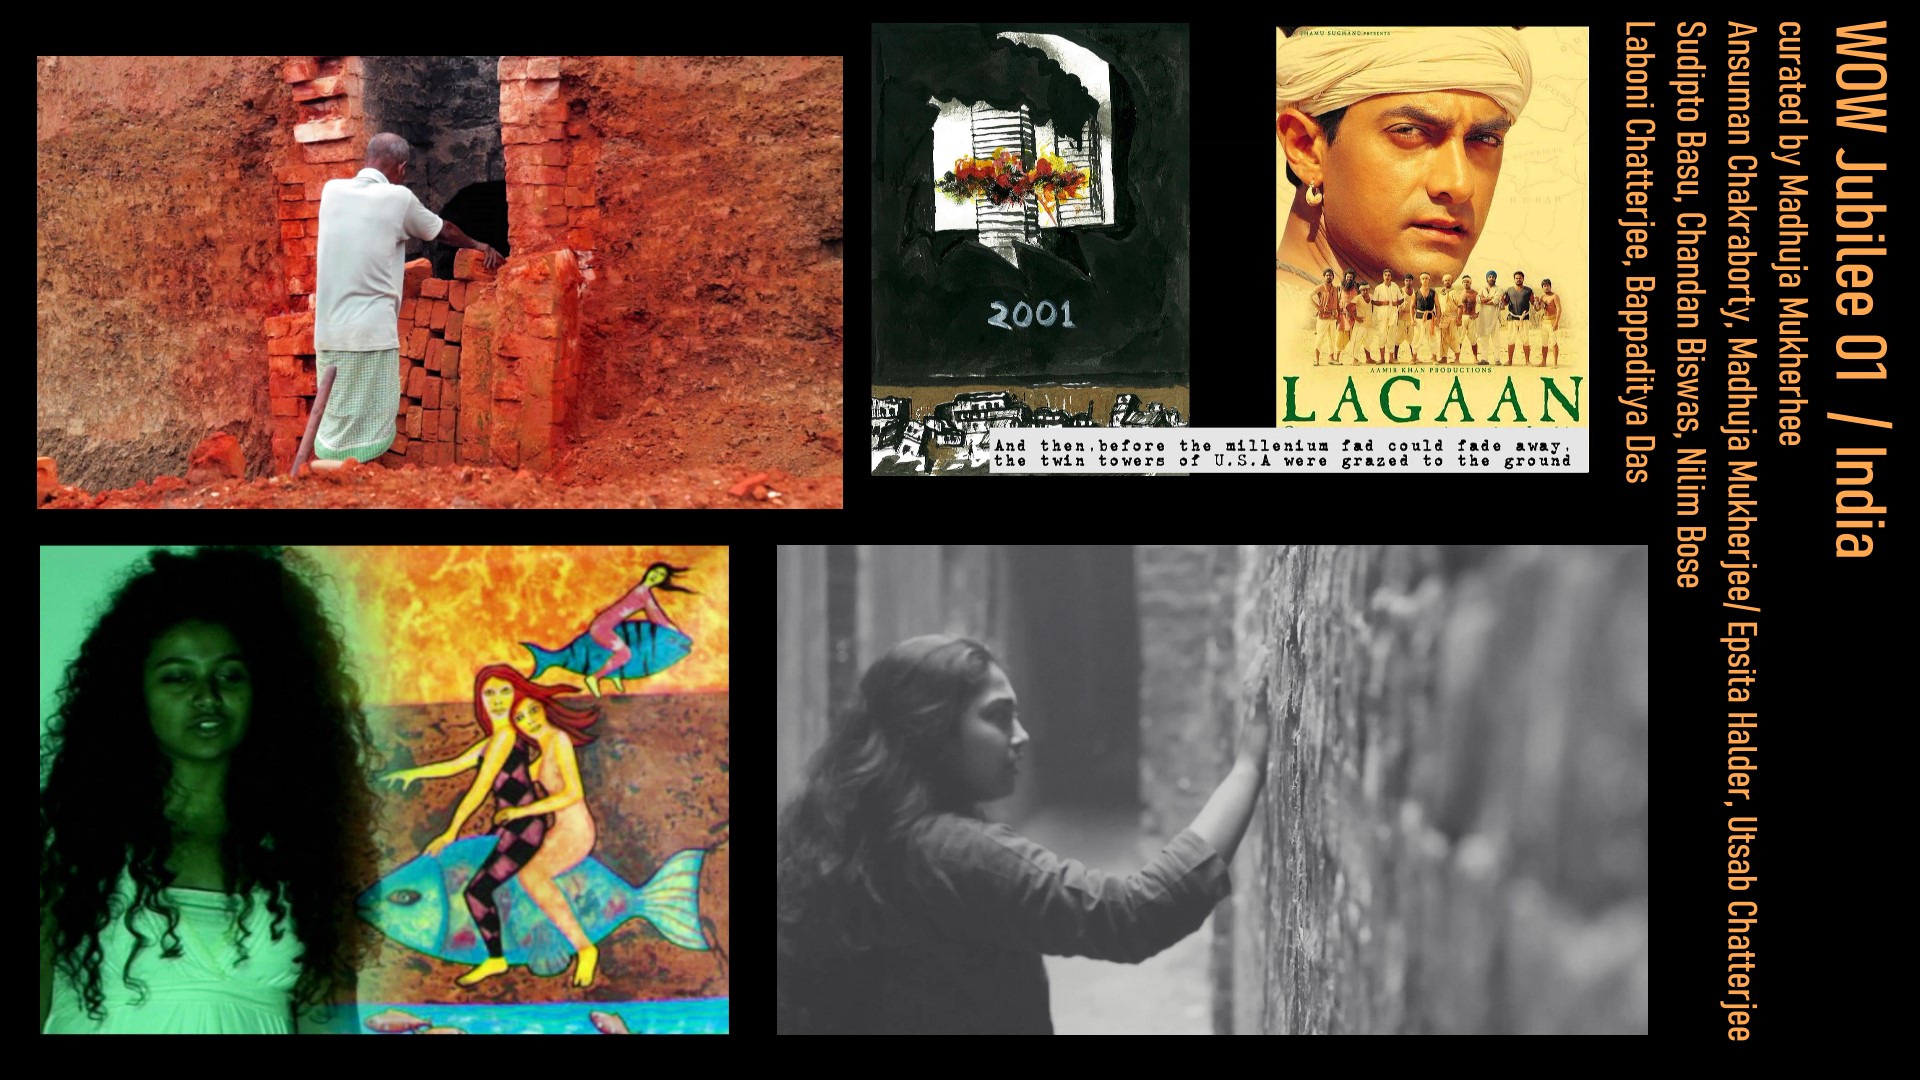 Lagaan Poster 1920x1080 Wallpaper Teahub Io Find images of high resolution. lagaan poster 1920x1080 wallpaper